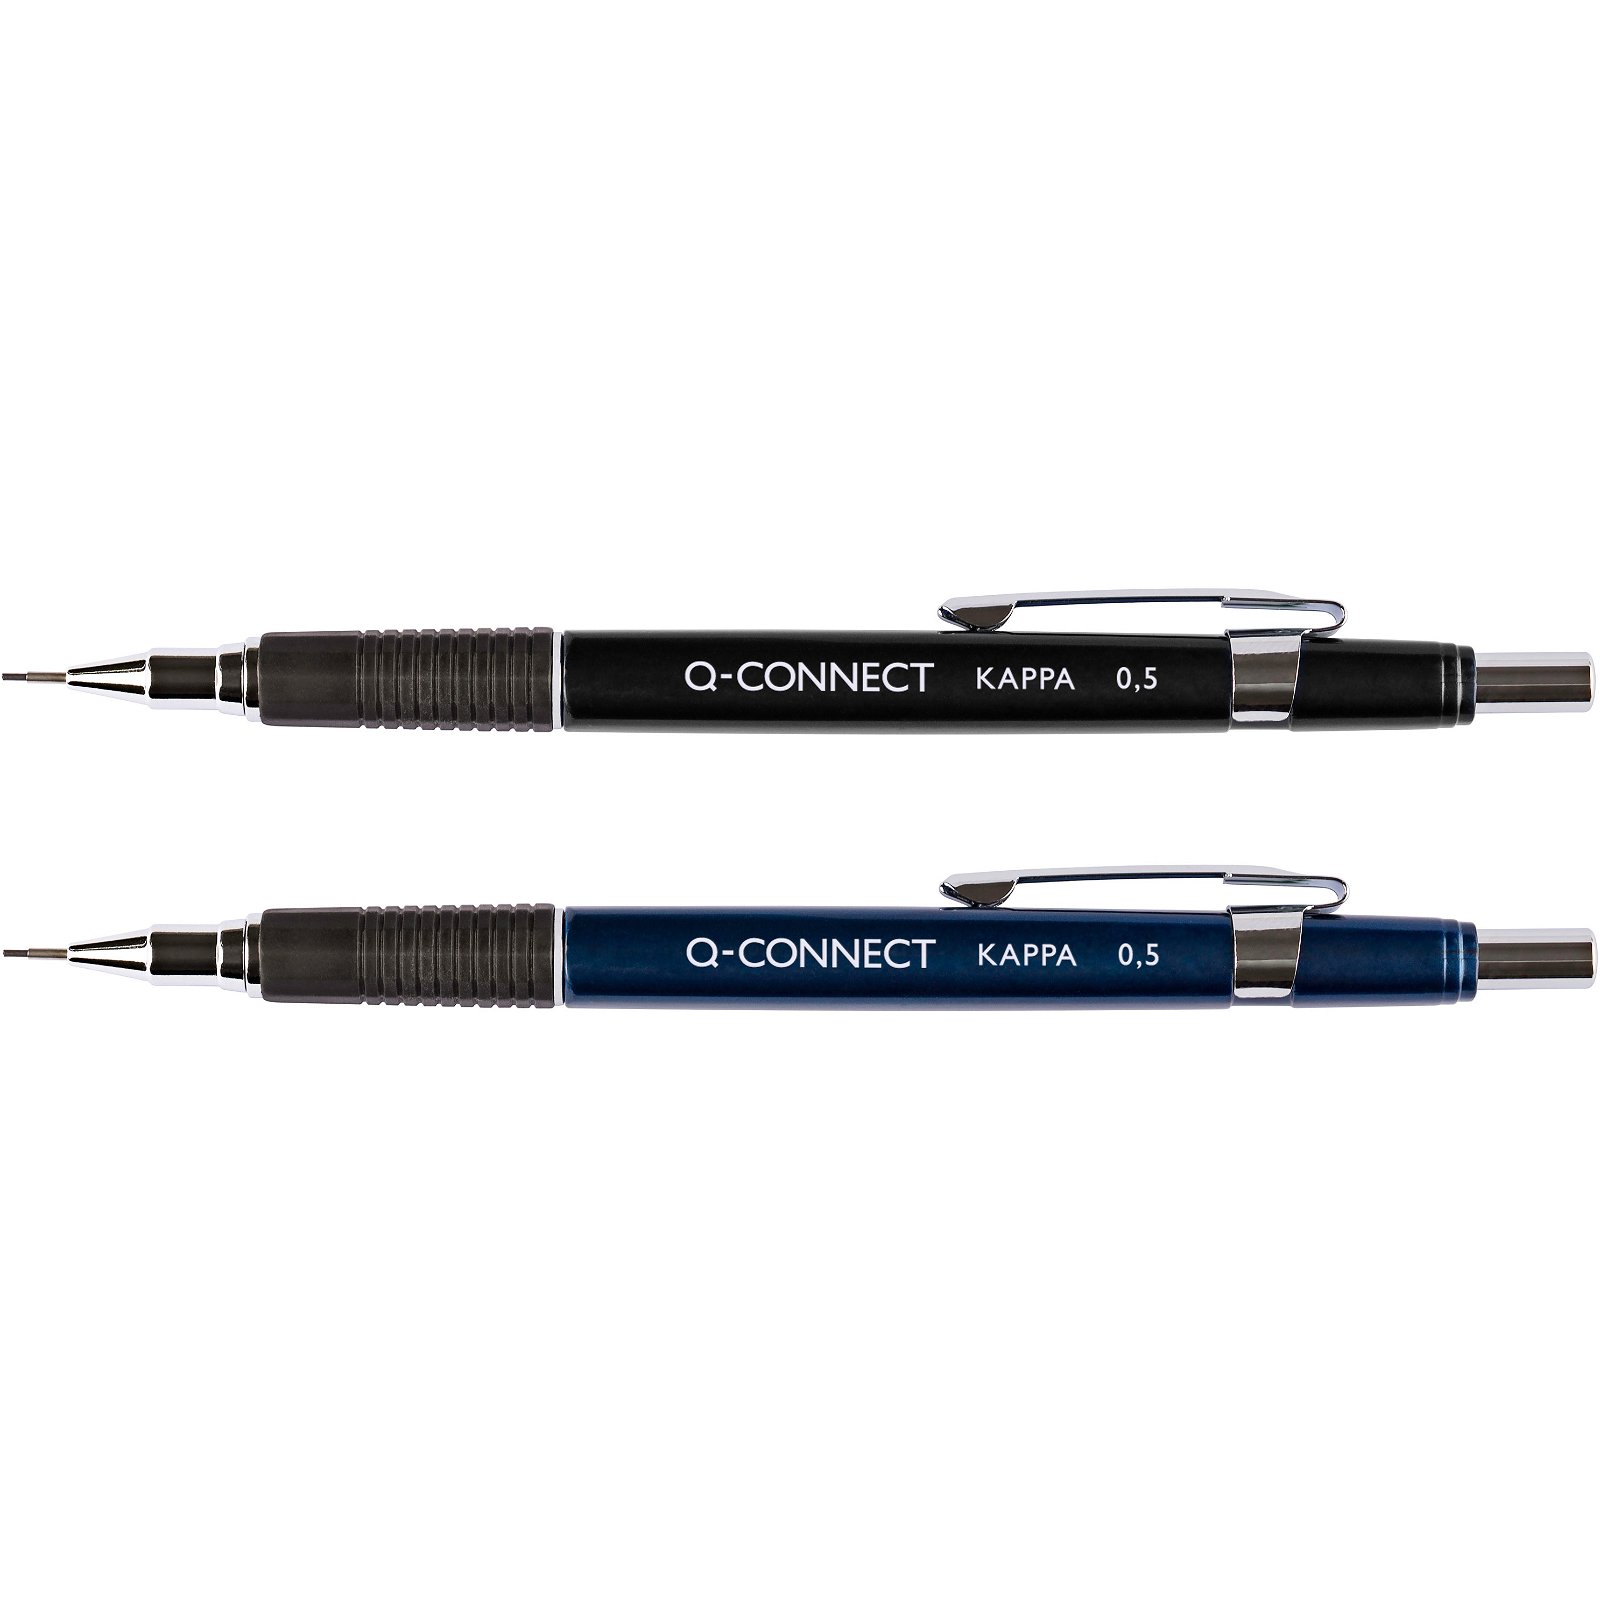 Q-connect Kappa pencil 0,5mm